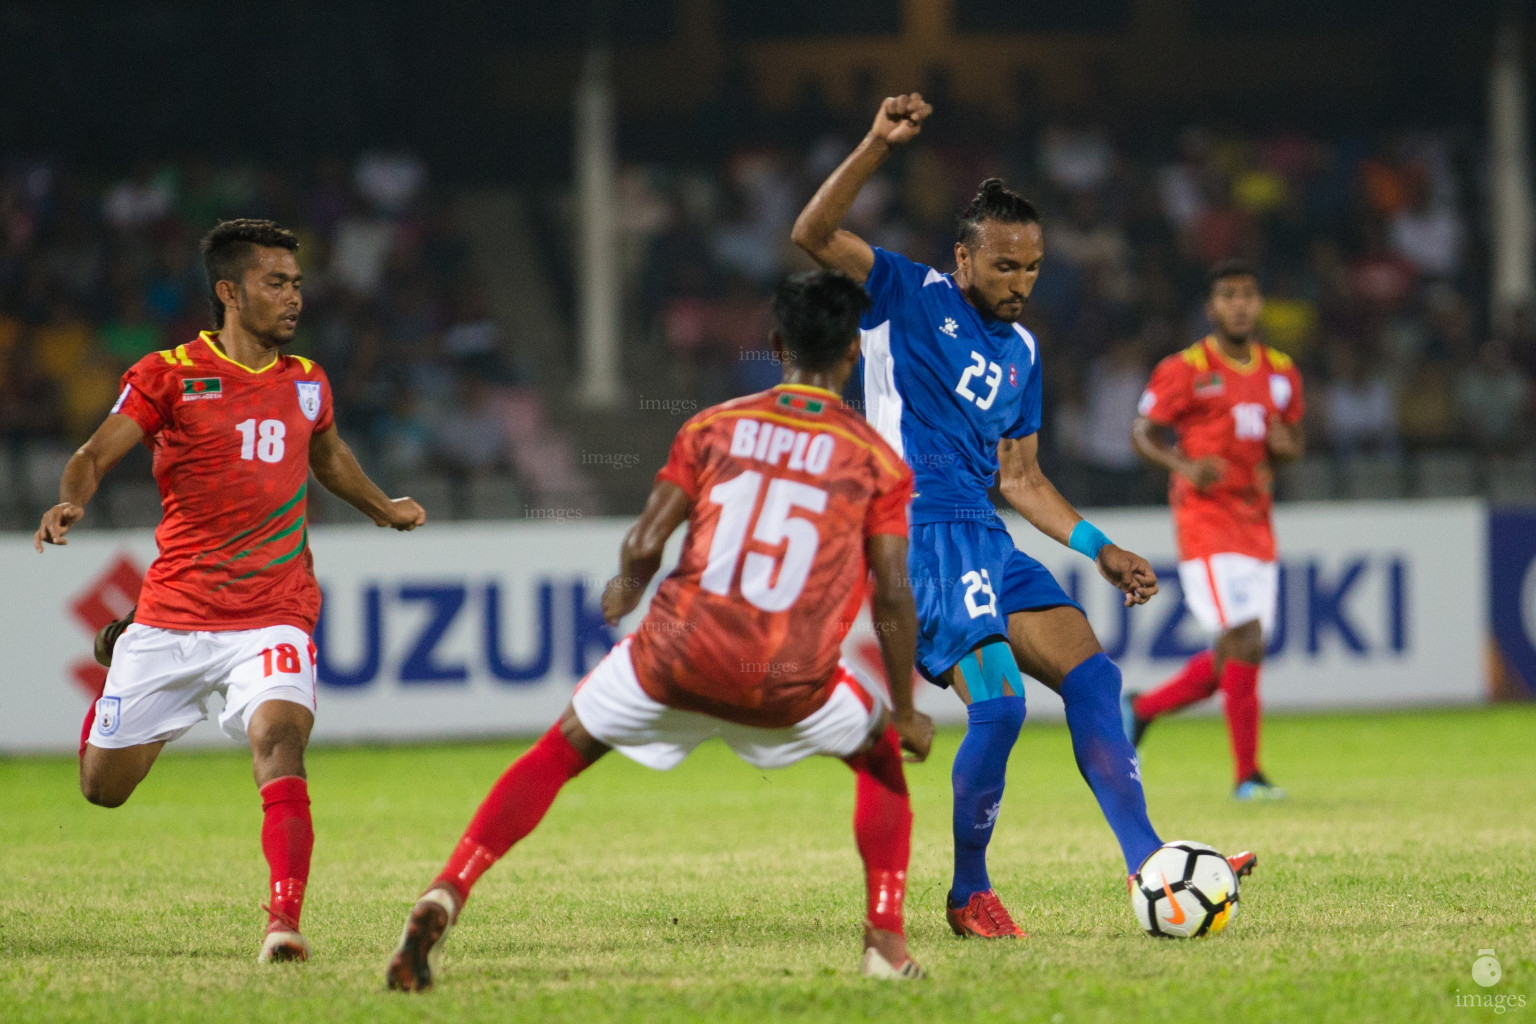 Bangladesh vs Nepal in SAFF Suzuki Cup 2018 in Dhaka, Bangladesh, Saturday, September 08, 2018. (Images.mv Photo/ Suadh Abdul Sattar)